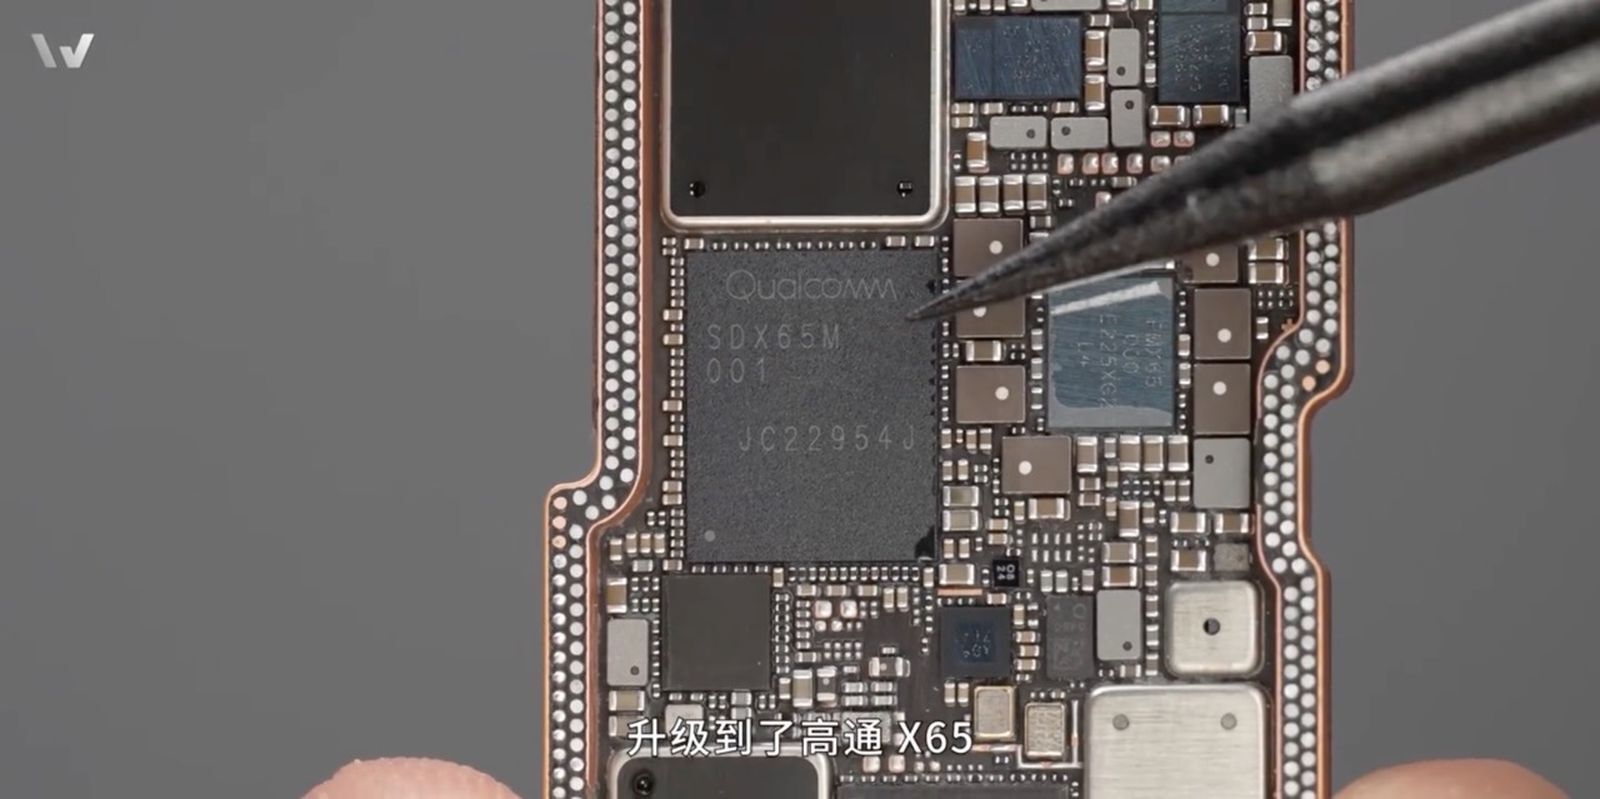 iPhone 14 Pro 내부 스크린 샷은 Qualcomm의 X65 모뎀을 확인합니다. iPhone 14 Pro는 새로운 모뎀 덕분에 5G 속도를 크게 향상시킵니다.